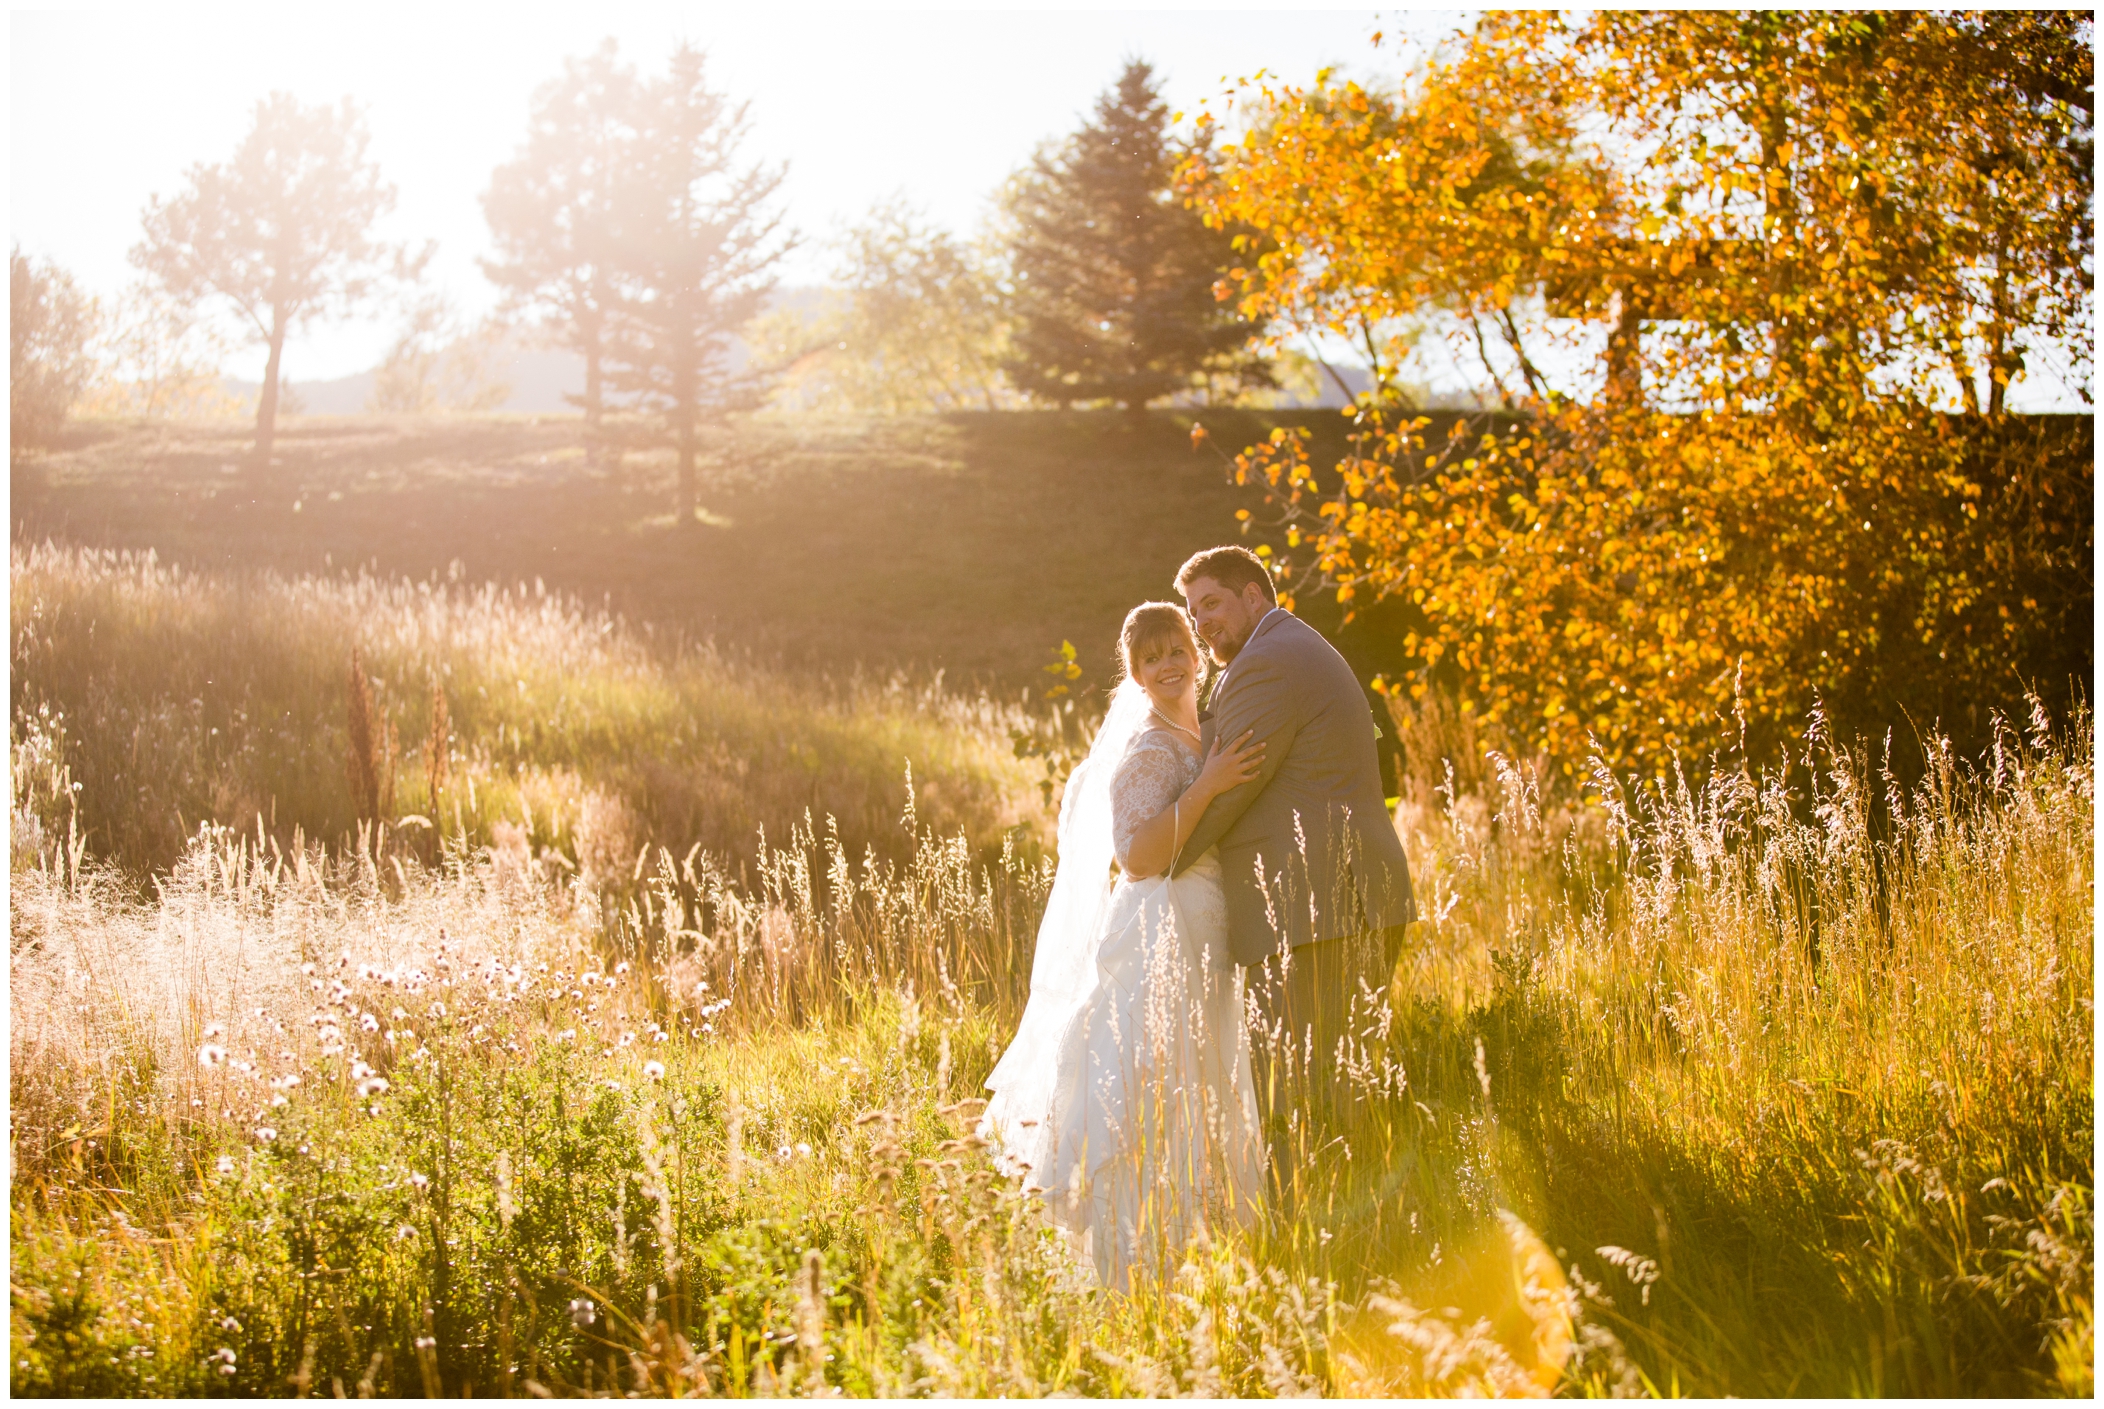 Colorado ranch wedding photos by Plum Pretty Photography 